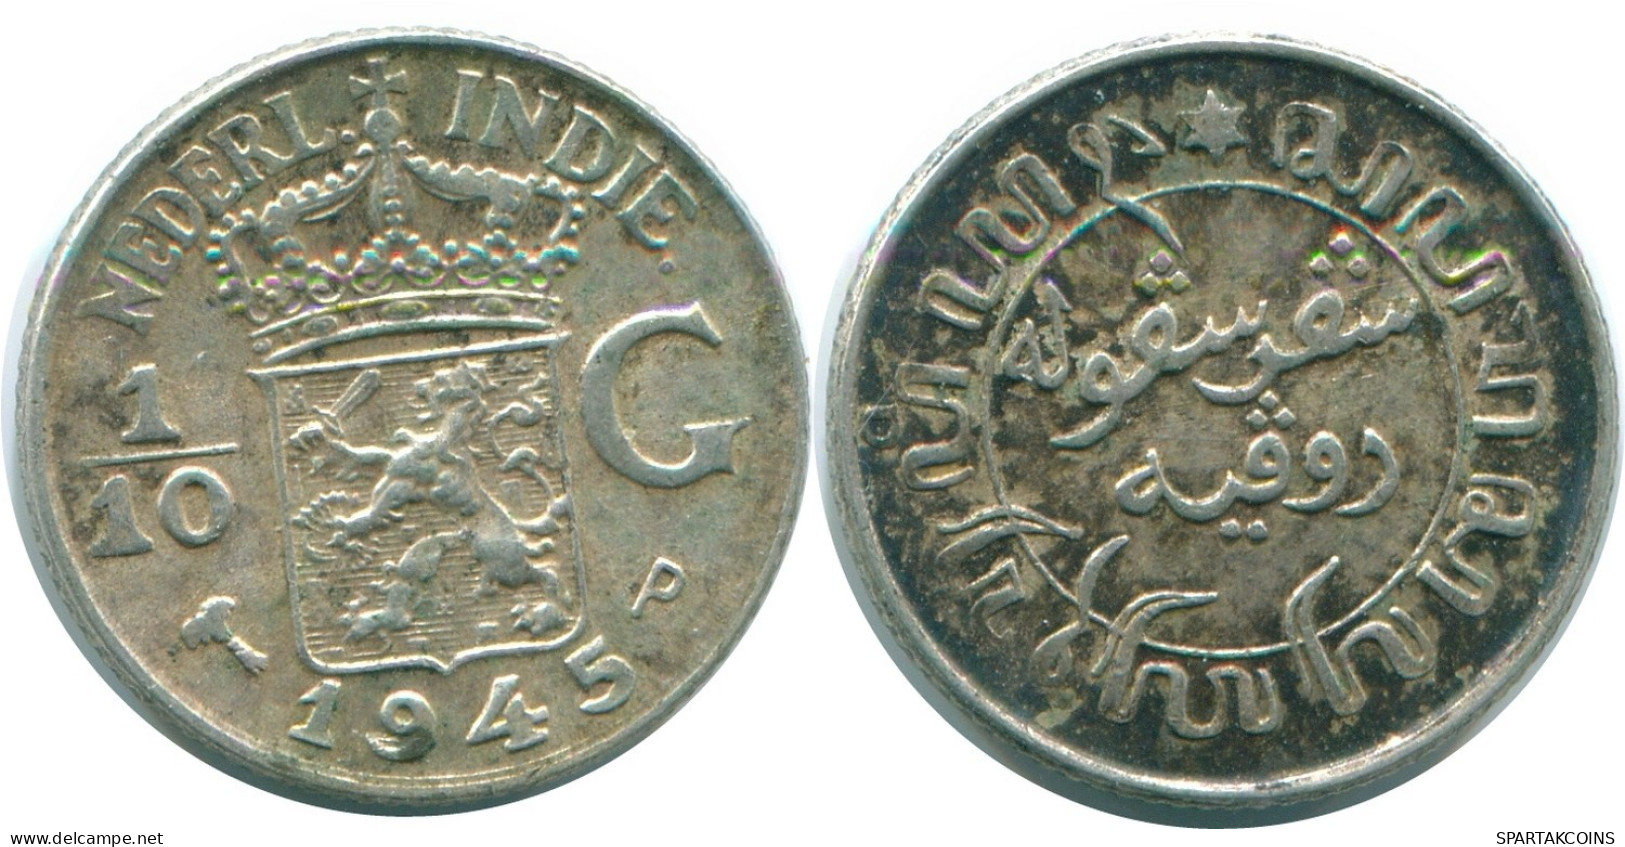 1/10 GULDEN 1945 P NETHERLANDS EAST INDIES SILVER Colonial Coin #NL14132.3.U.A - Nederlands-Indië